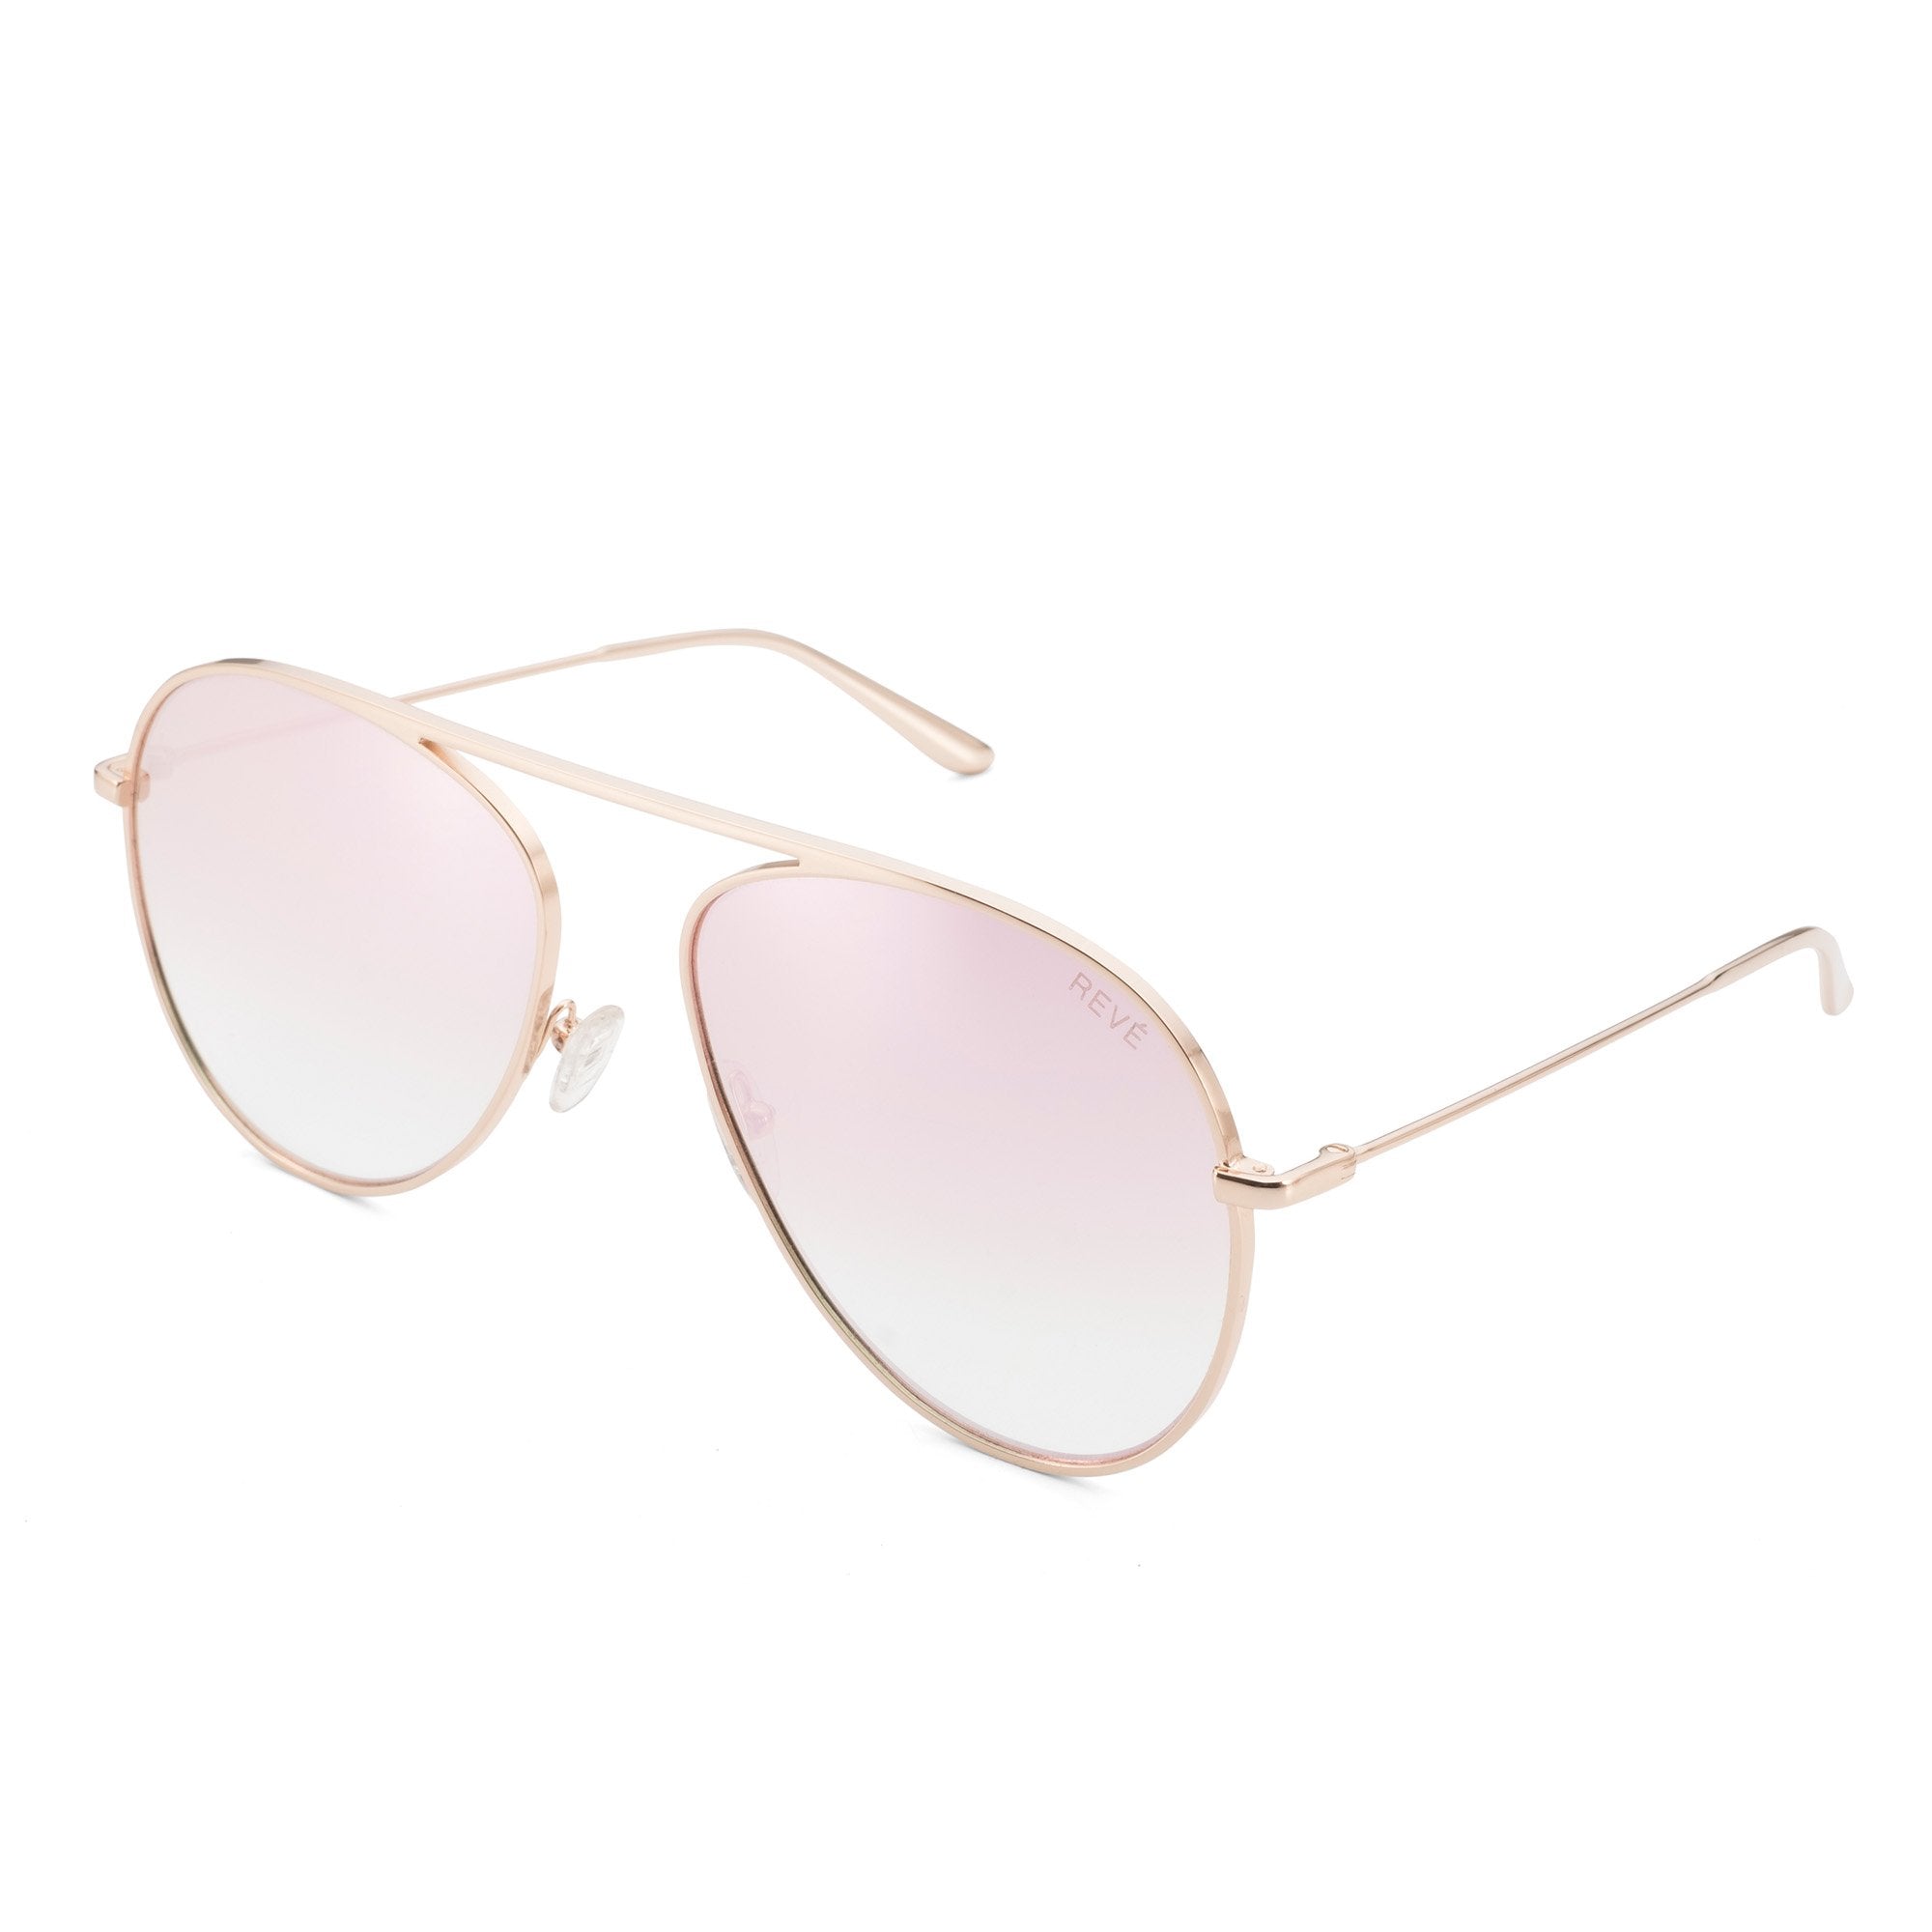 REVE by RENE glimpse aviator sunglasses | BLUSH ROSEGOLD sunglasses